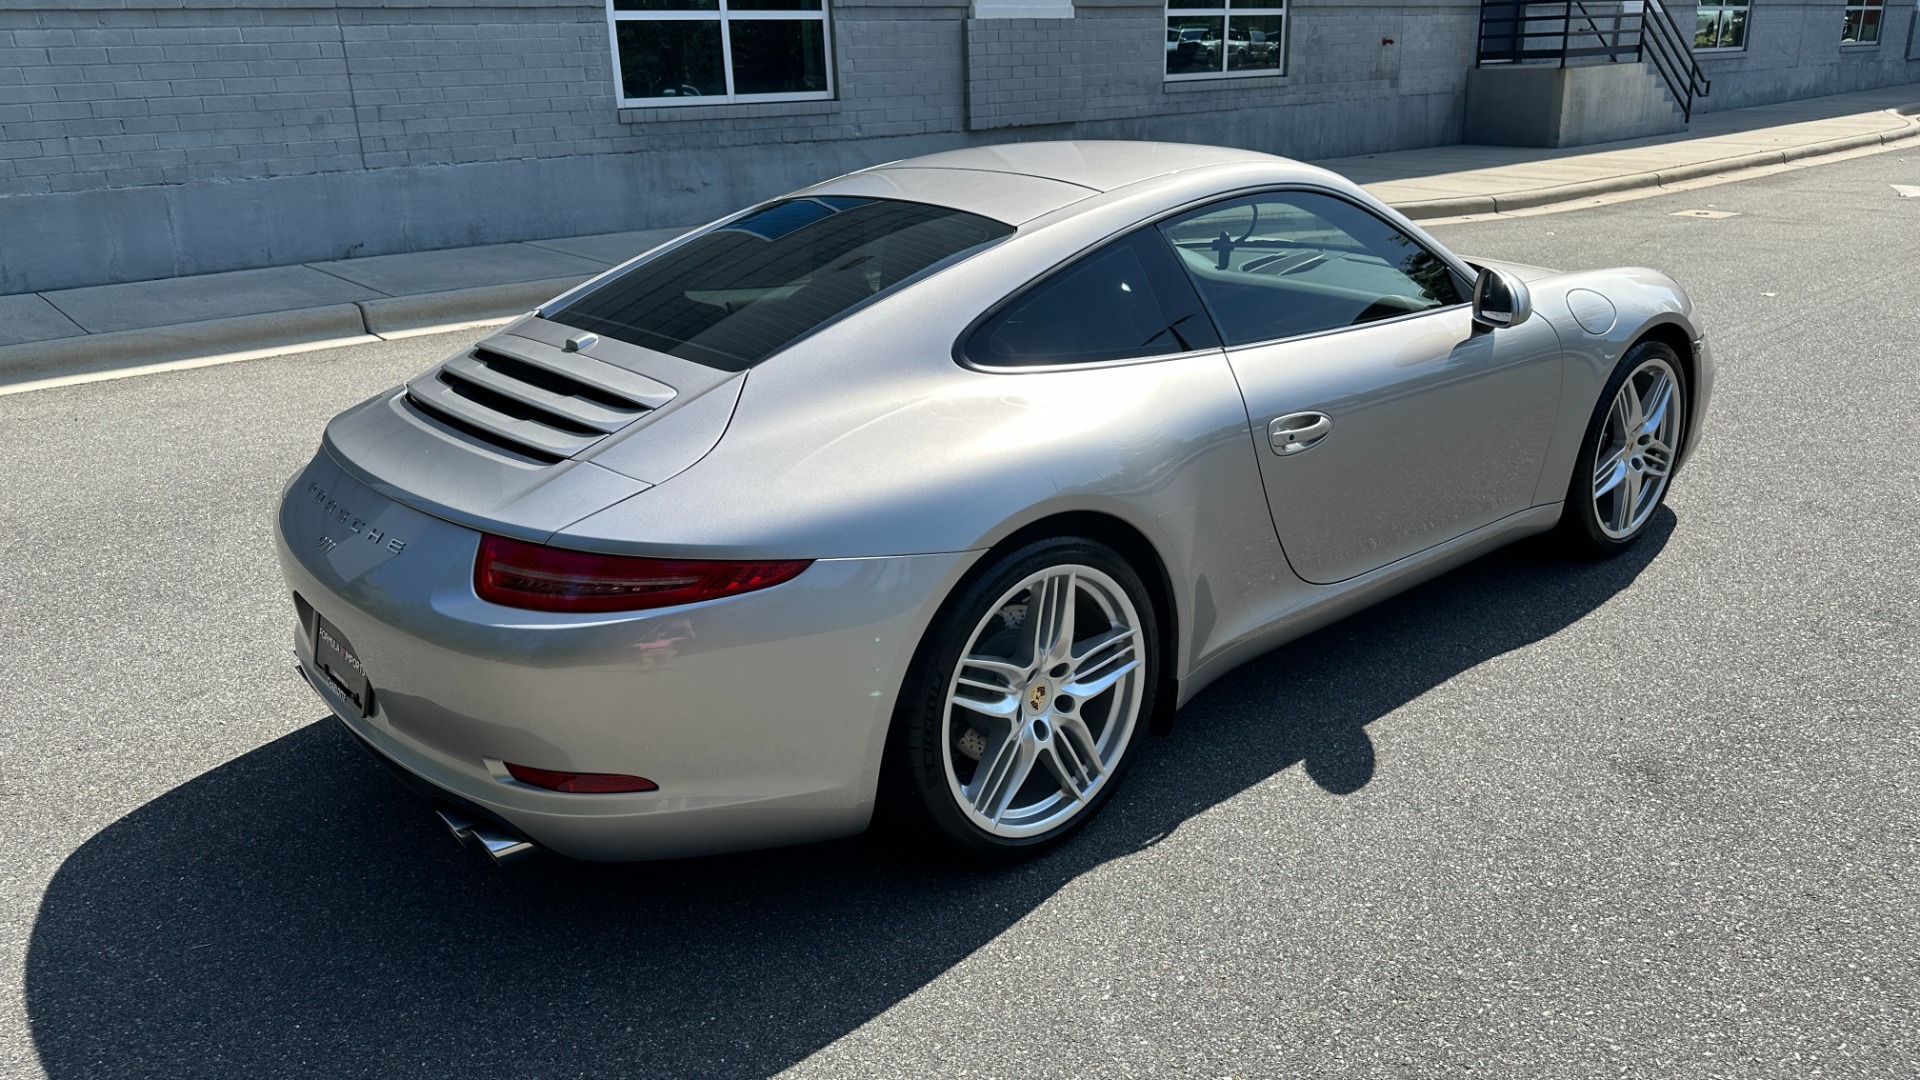 Used 2012 Porsche 911 991 CARRERA / PREMIUM PKG PLUS / SPORT EXHAUST / SPORT SEATS for sale $71,000 at Formula Imports in Charlotte NC 28227 4